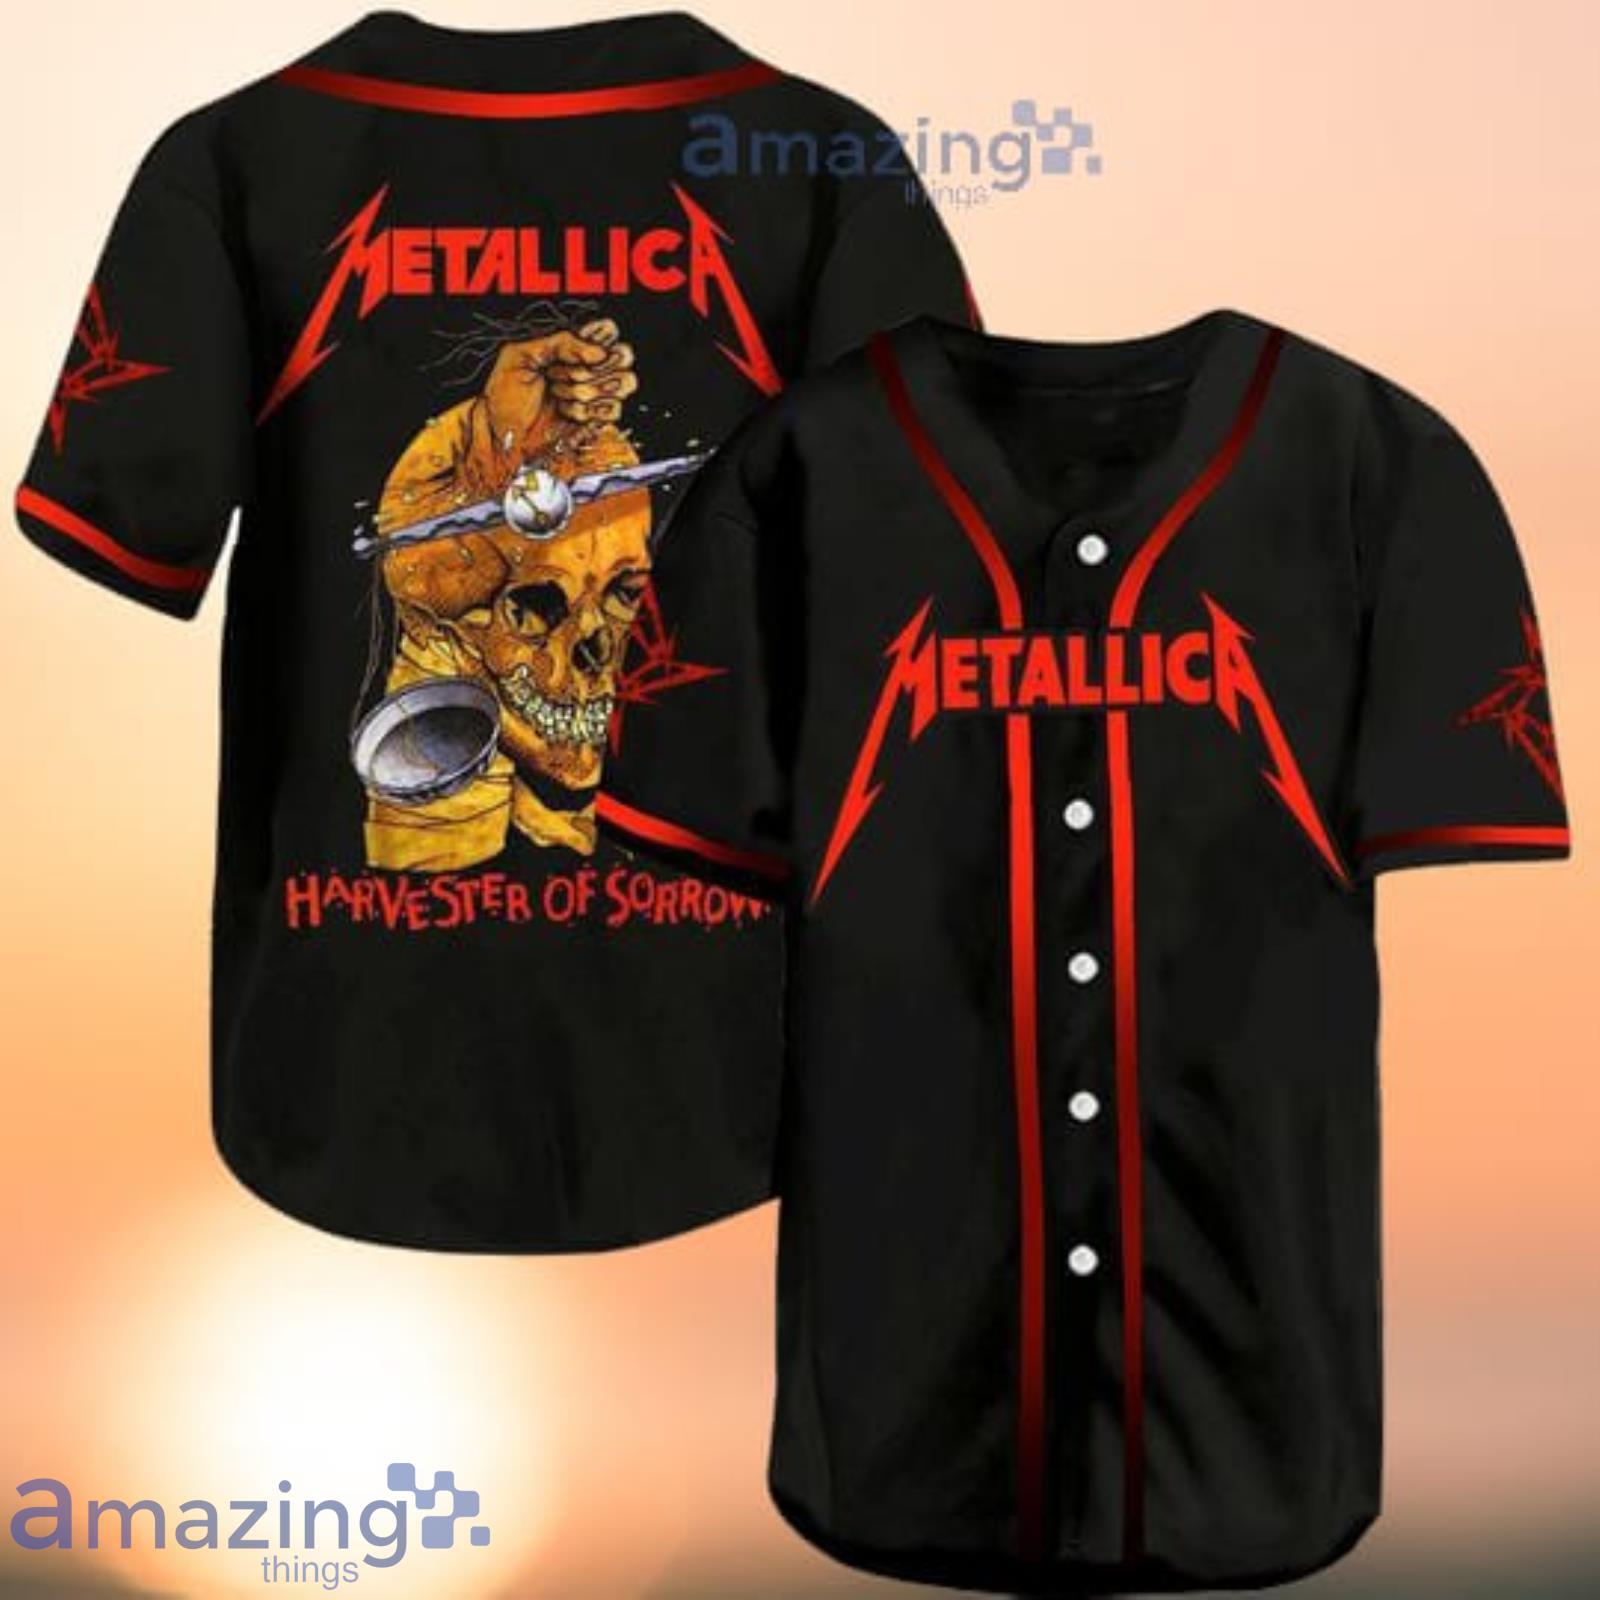 Metallic Harvester Of Sorrow Baseball Jersey Shirt